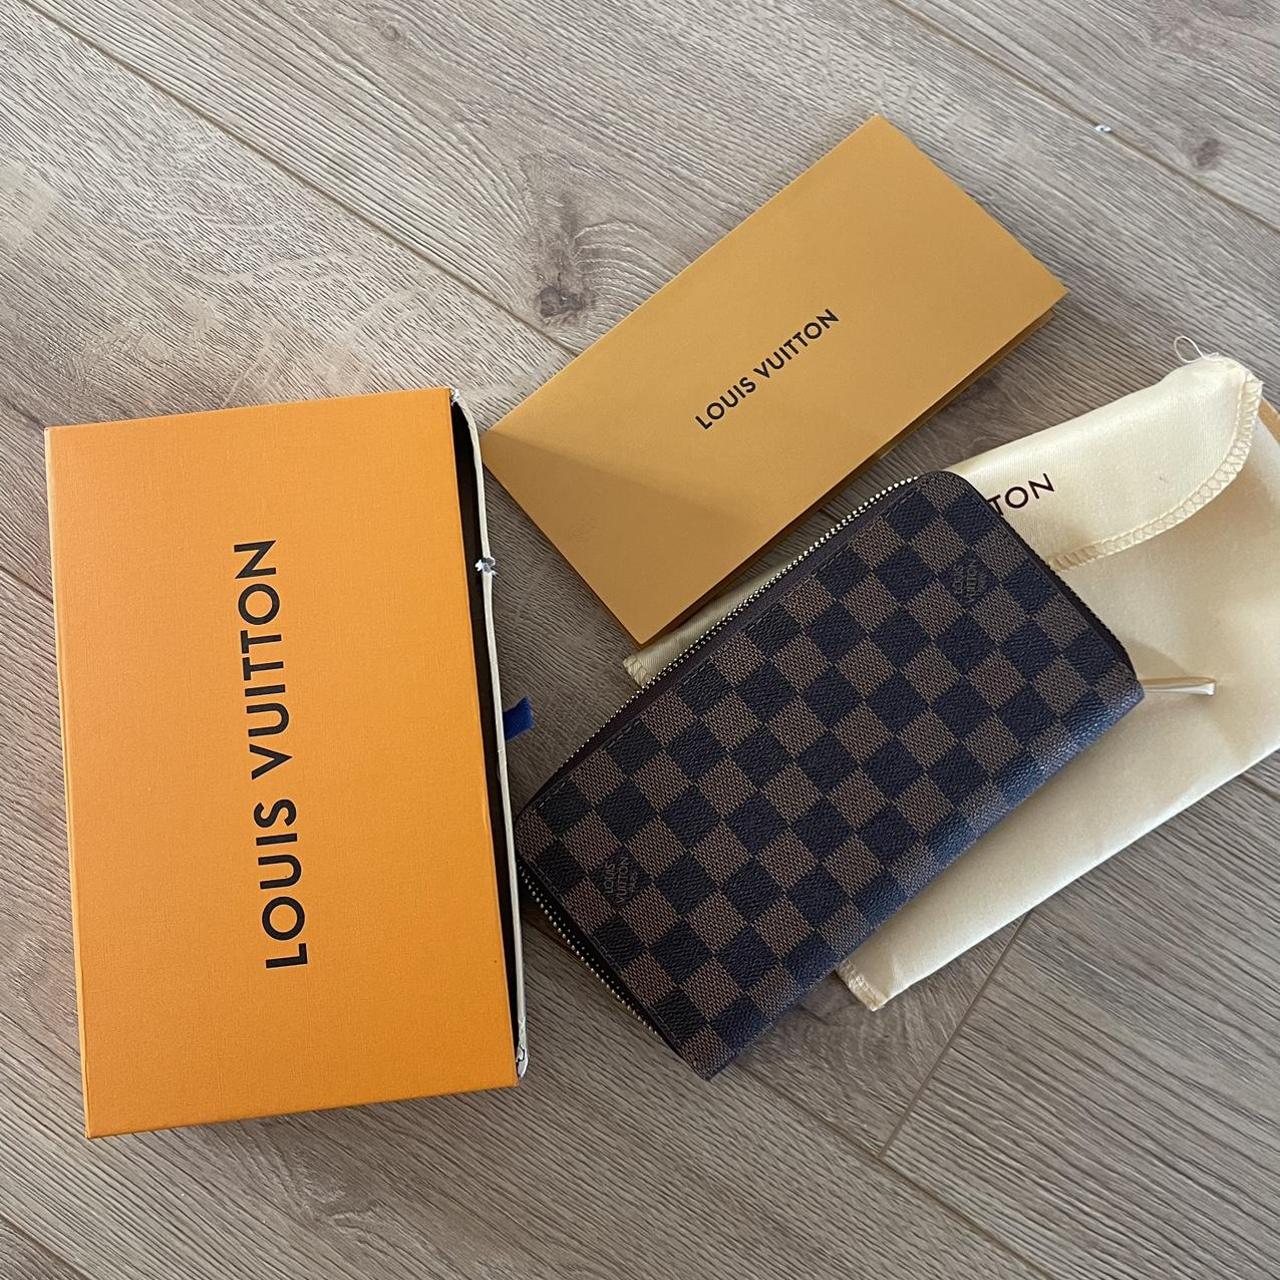 New, never used Louis Vuitton Zippy Wallet! - Depop